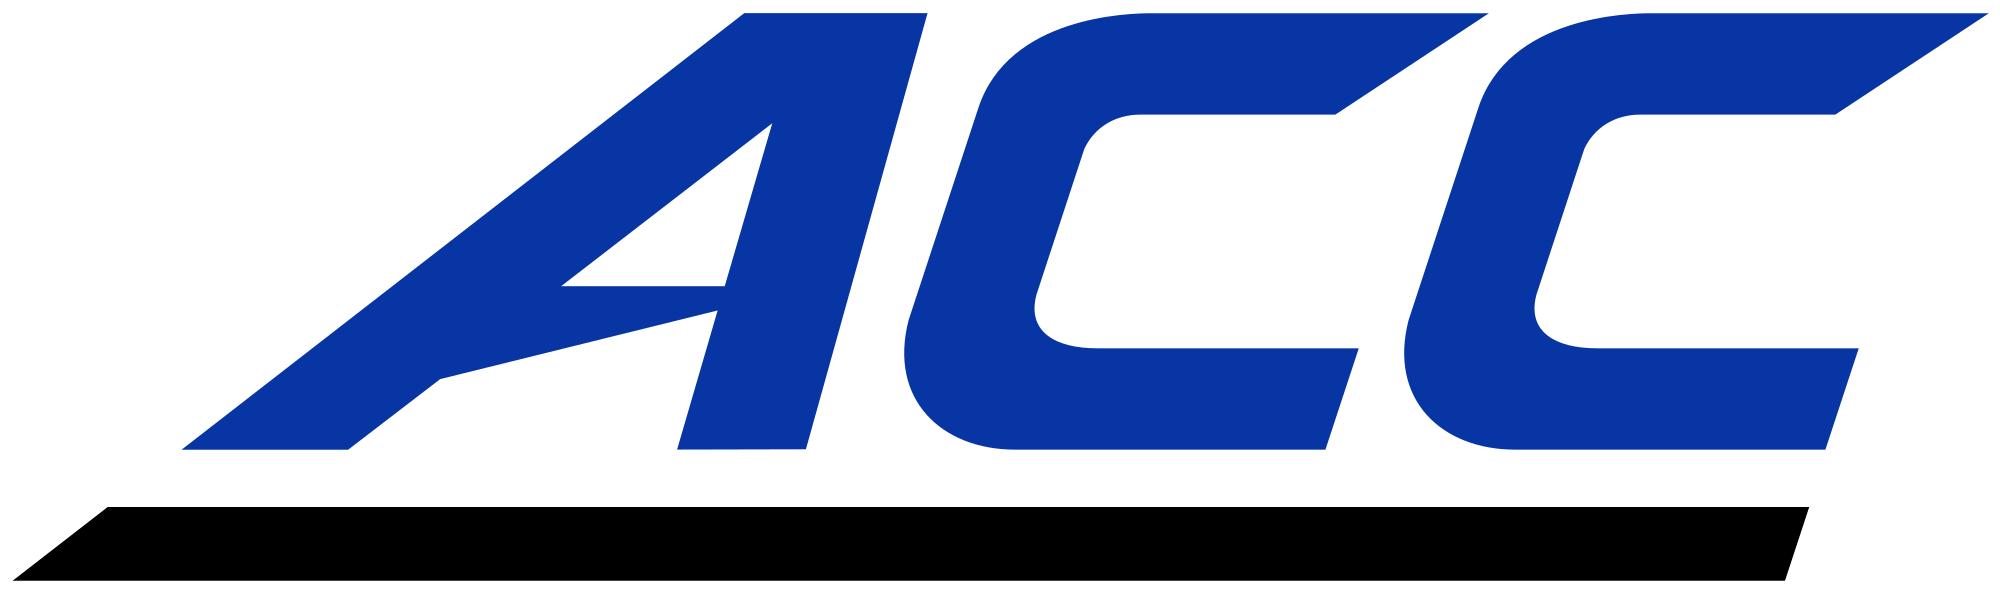 Duke Football Logo - File:ACC logo in Duke colors.svg - Wikimedia Commons